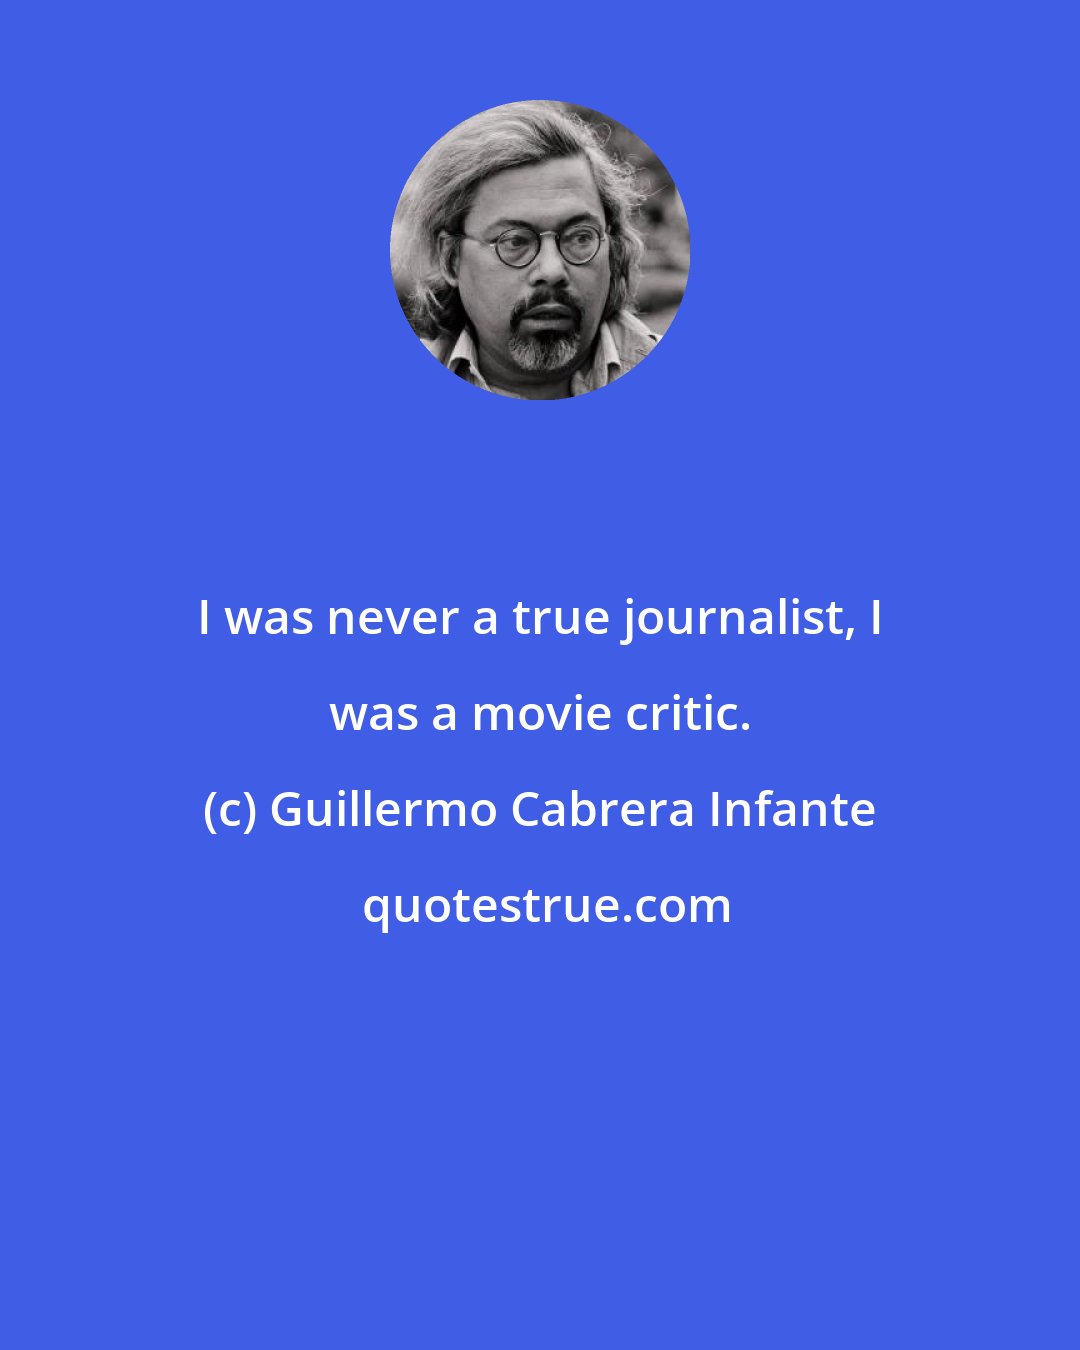 Guillermo Cabrera Infante: I was never a true journalist, I was a movie critic.